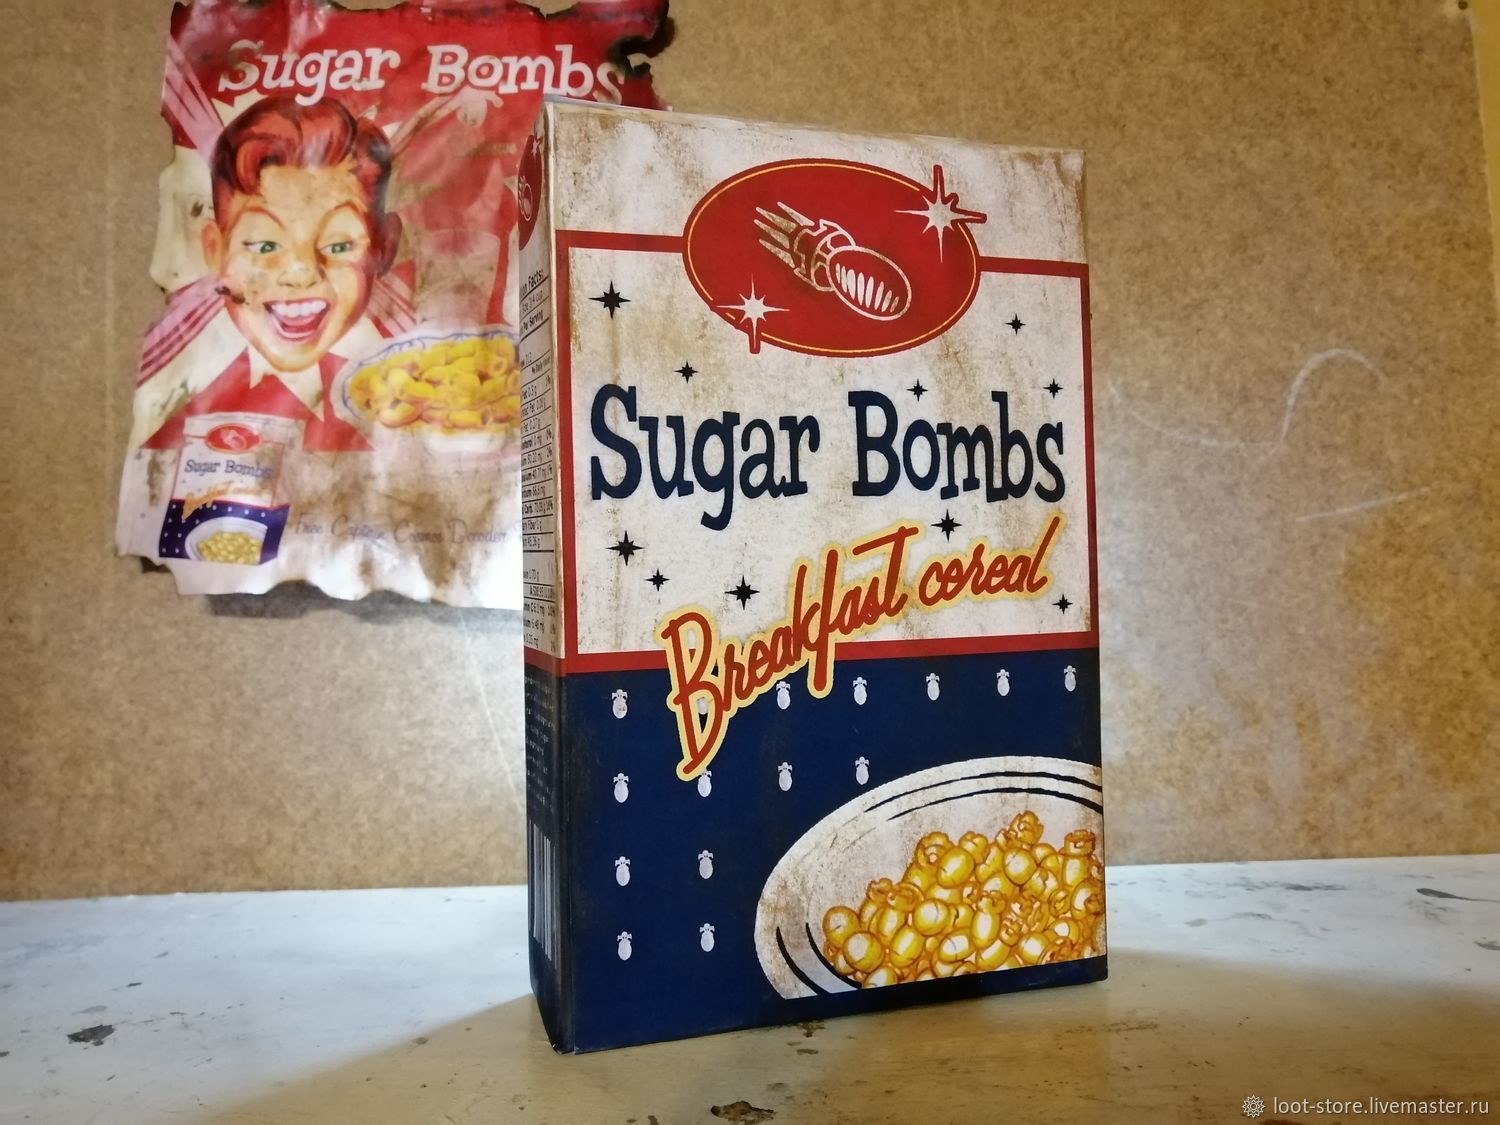 Sugar bombs